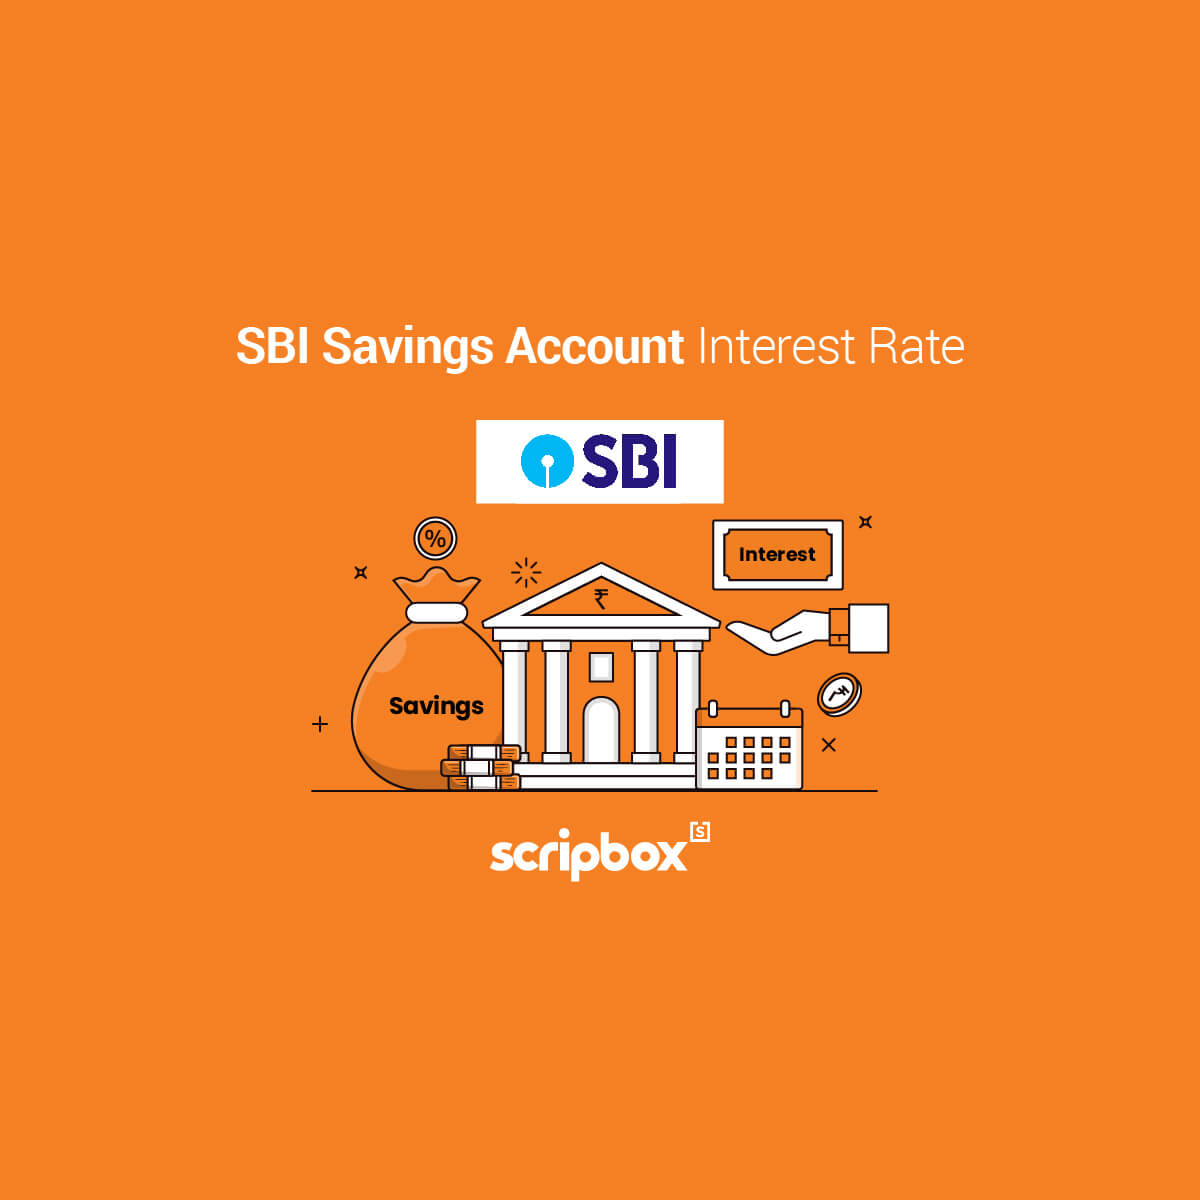 sbi savings account interest rate